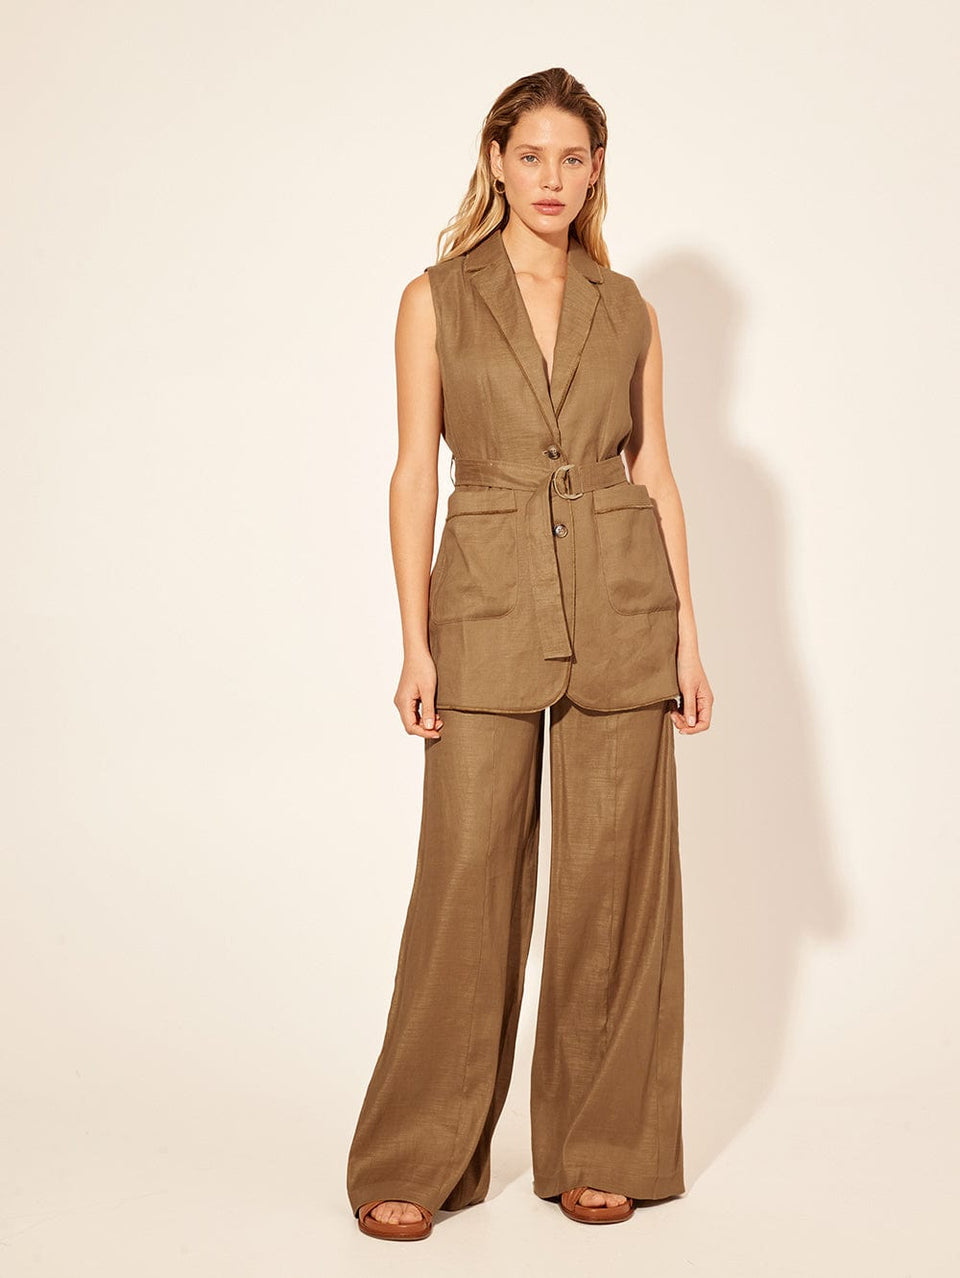 Penelope Vest KIVARI | Model wears brown tailored vest